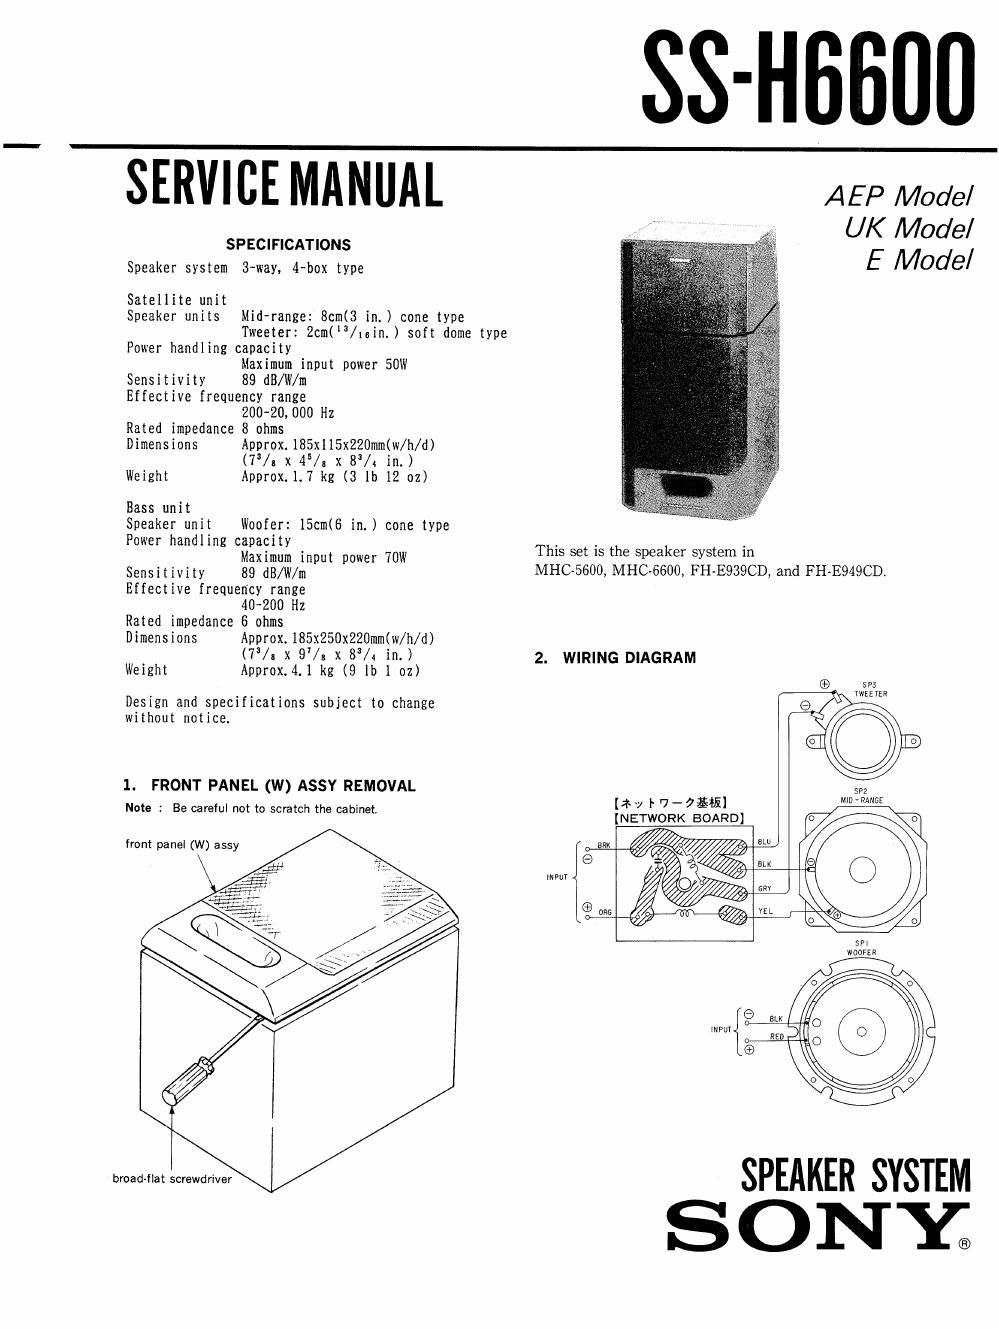 sony ss h 6600 service manual